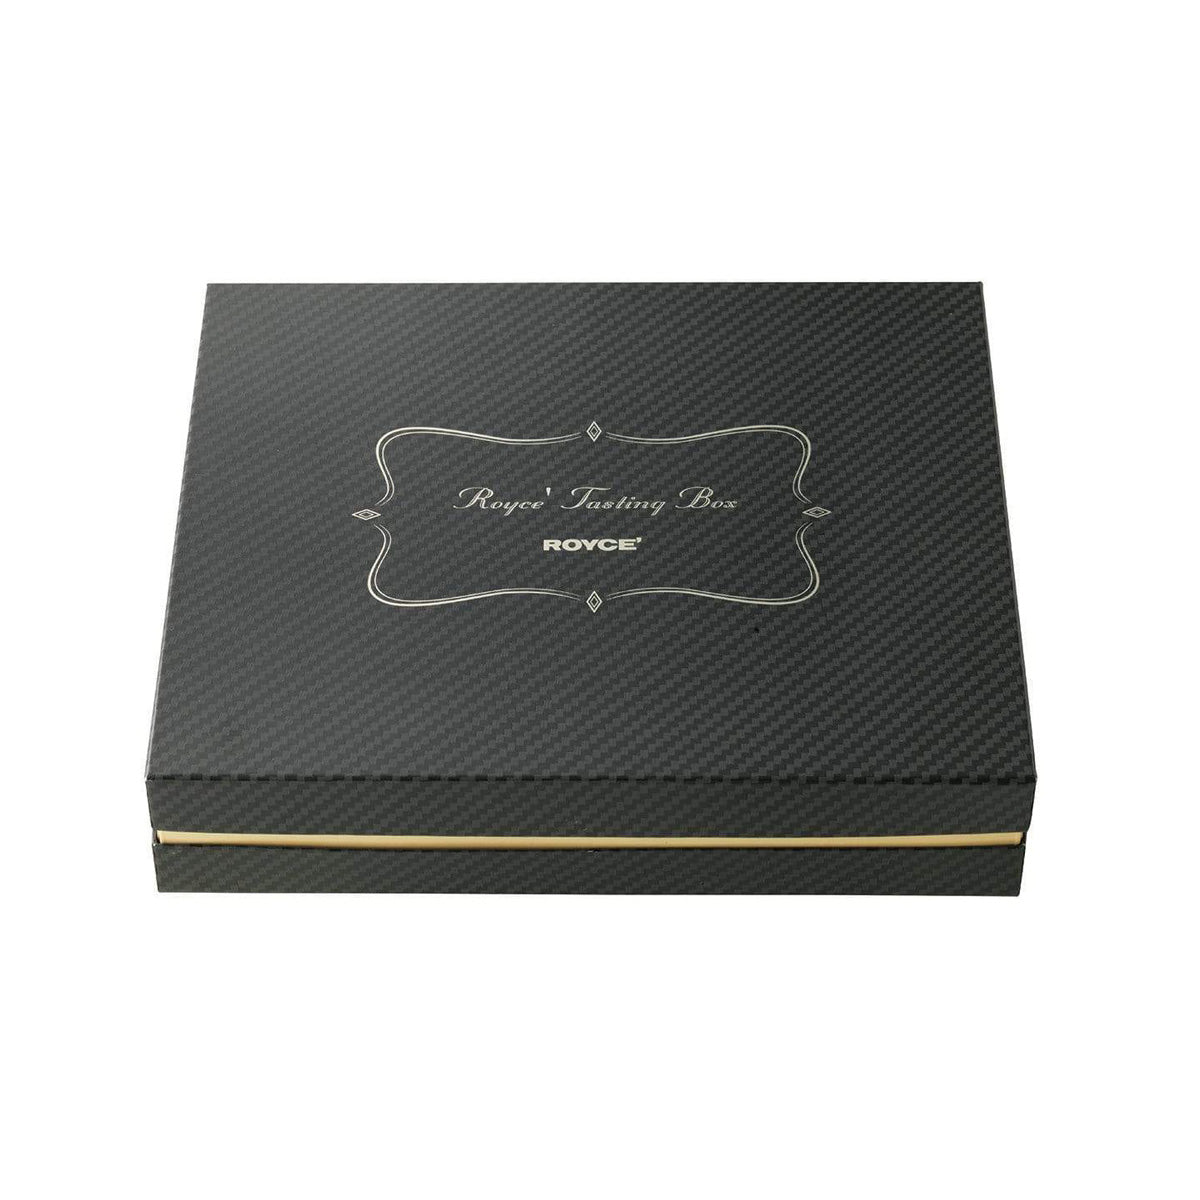 ROYCE' Chocolate - ROYCE' Tasting Box - Image shows a black box. Text in center says ROYCE' Tasting Box ROYCE'.